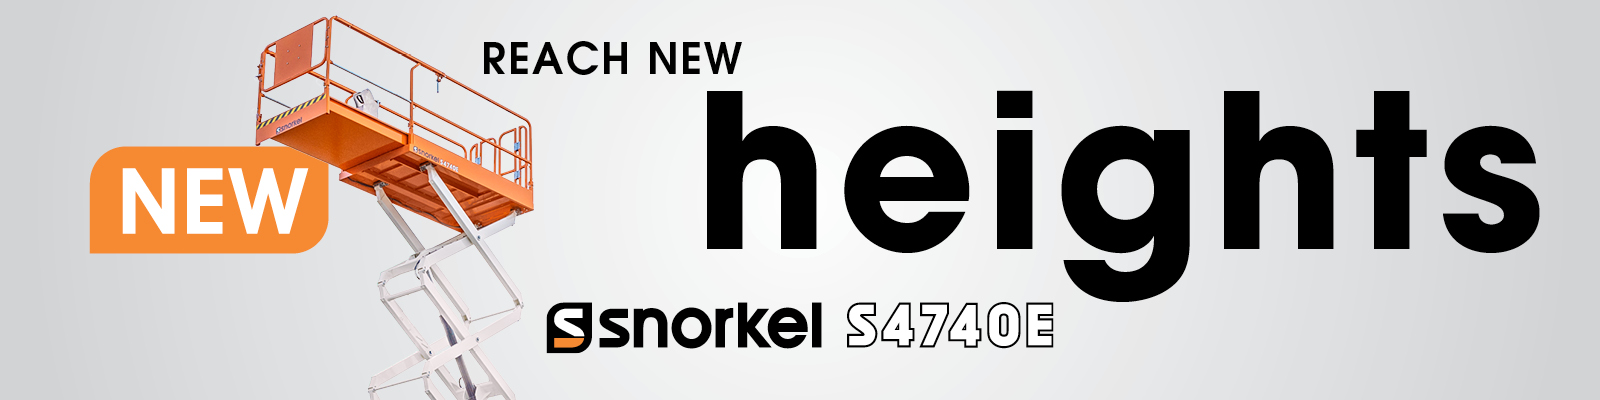 Reach New Heights Snorkel S4740E